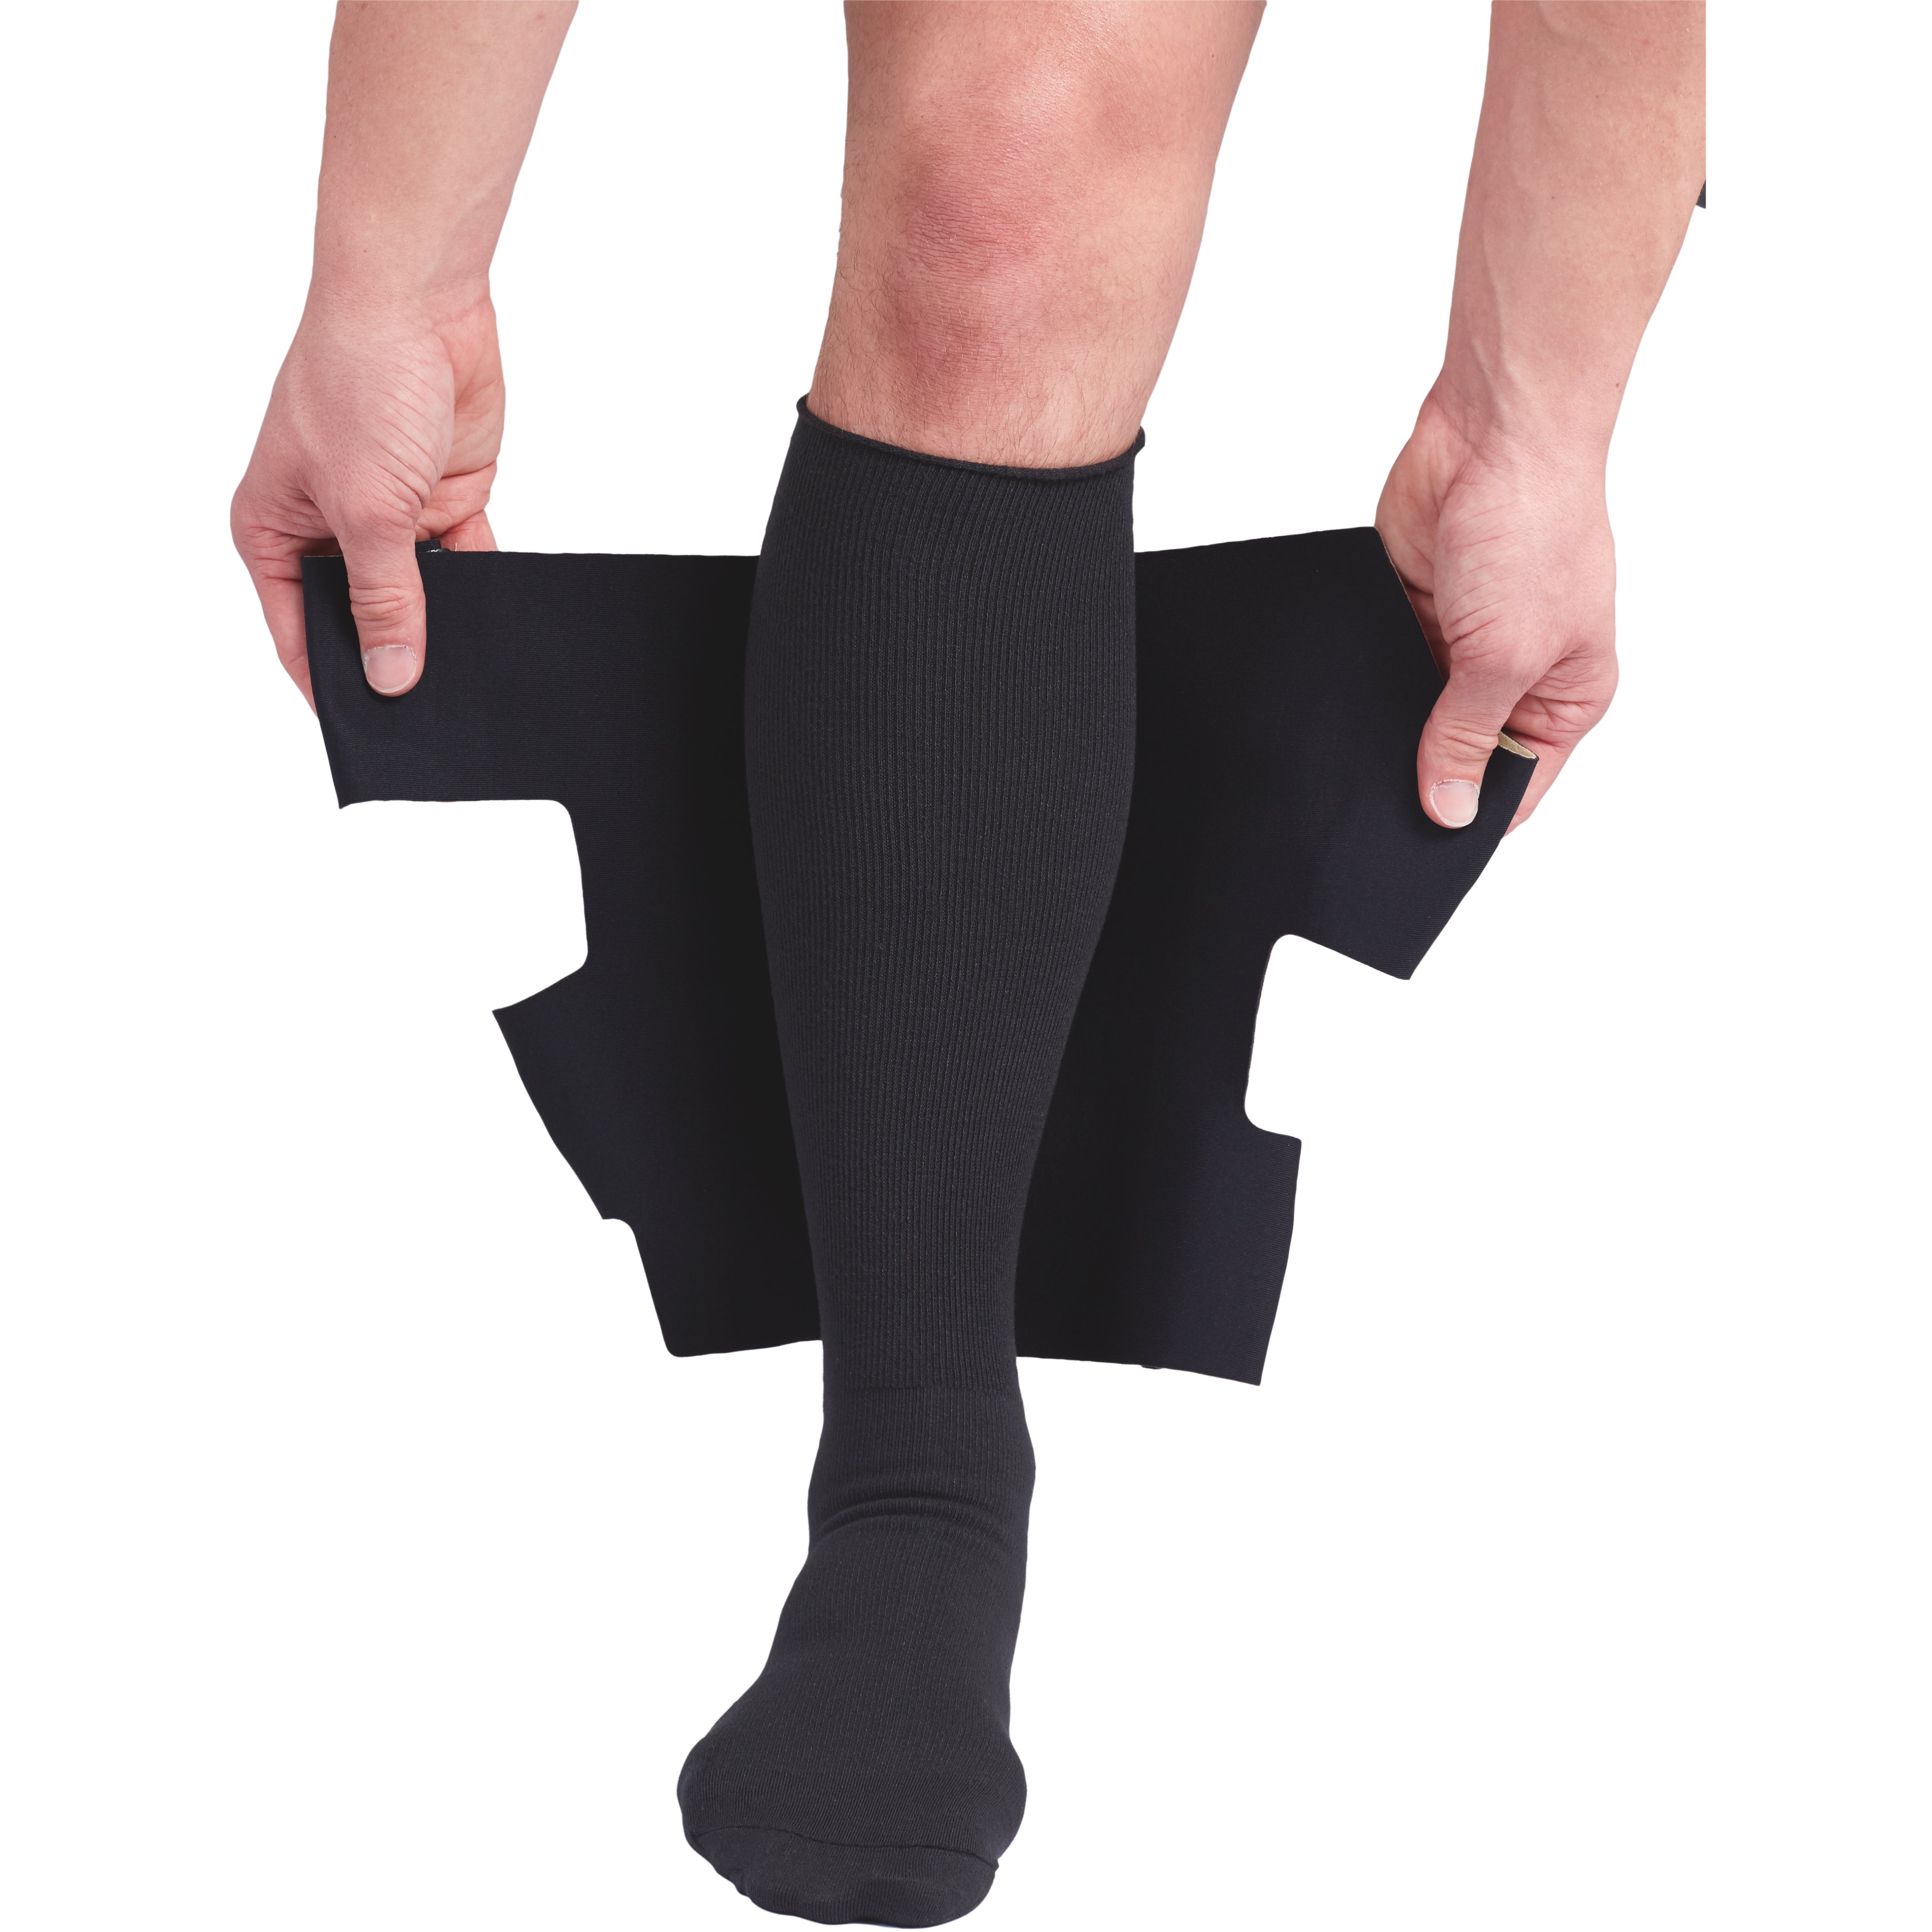 circaid® juxtalite® Lower leg garment by Medi